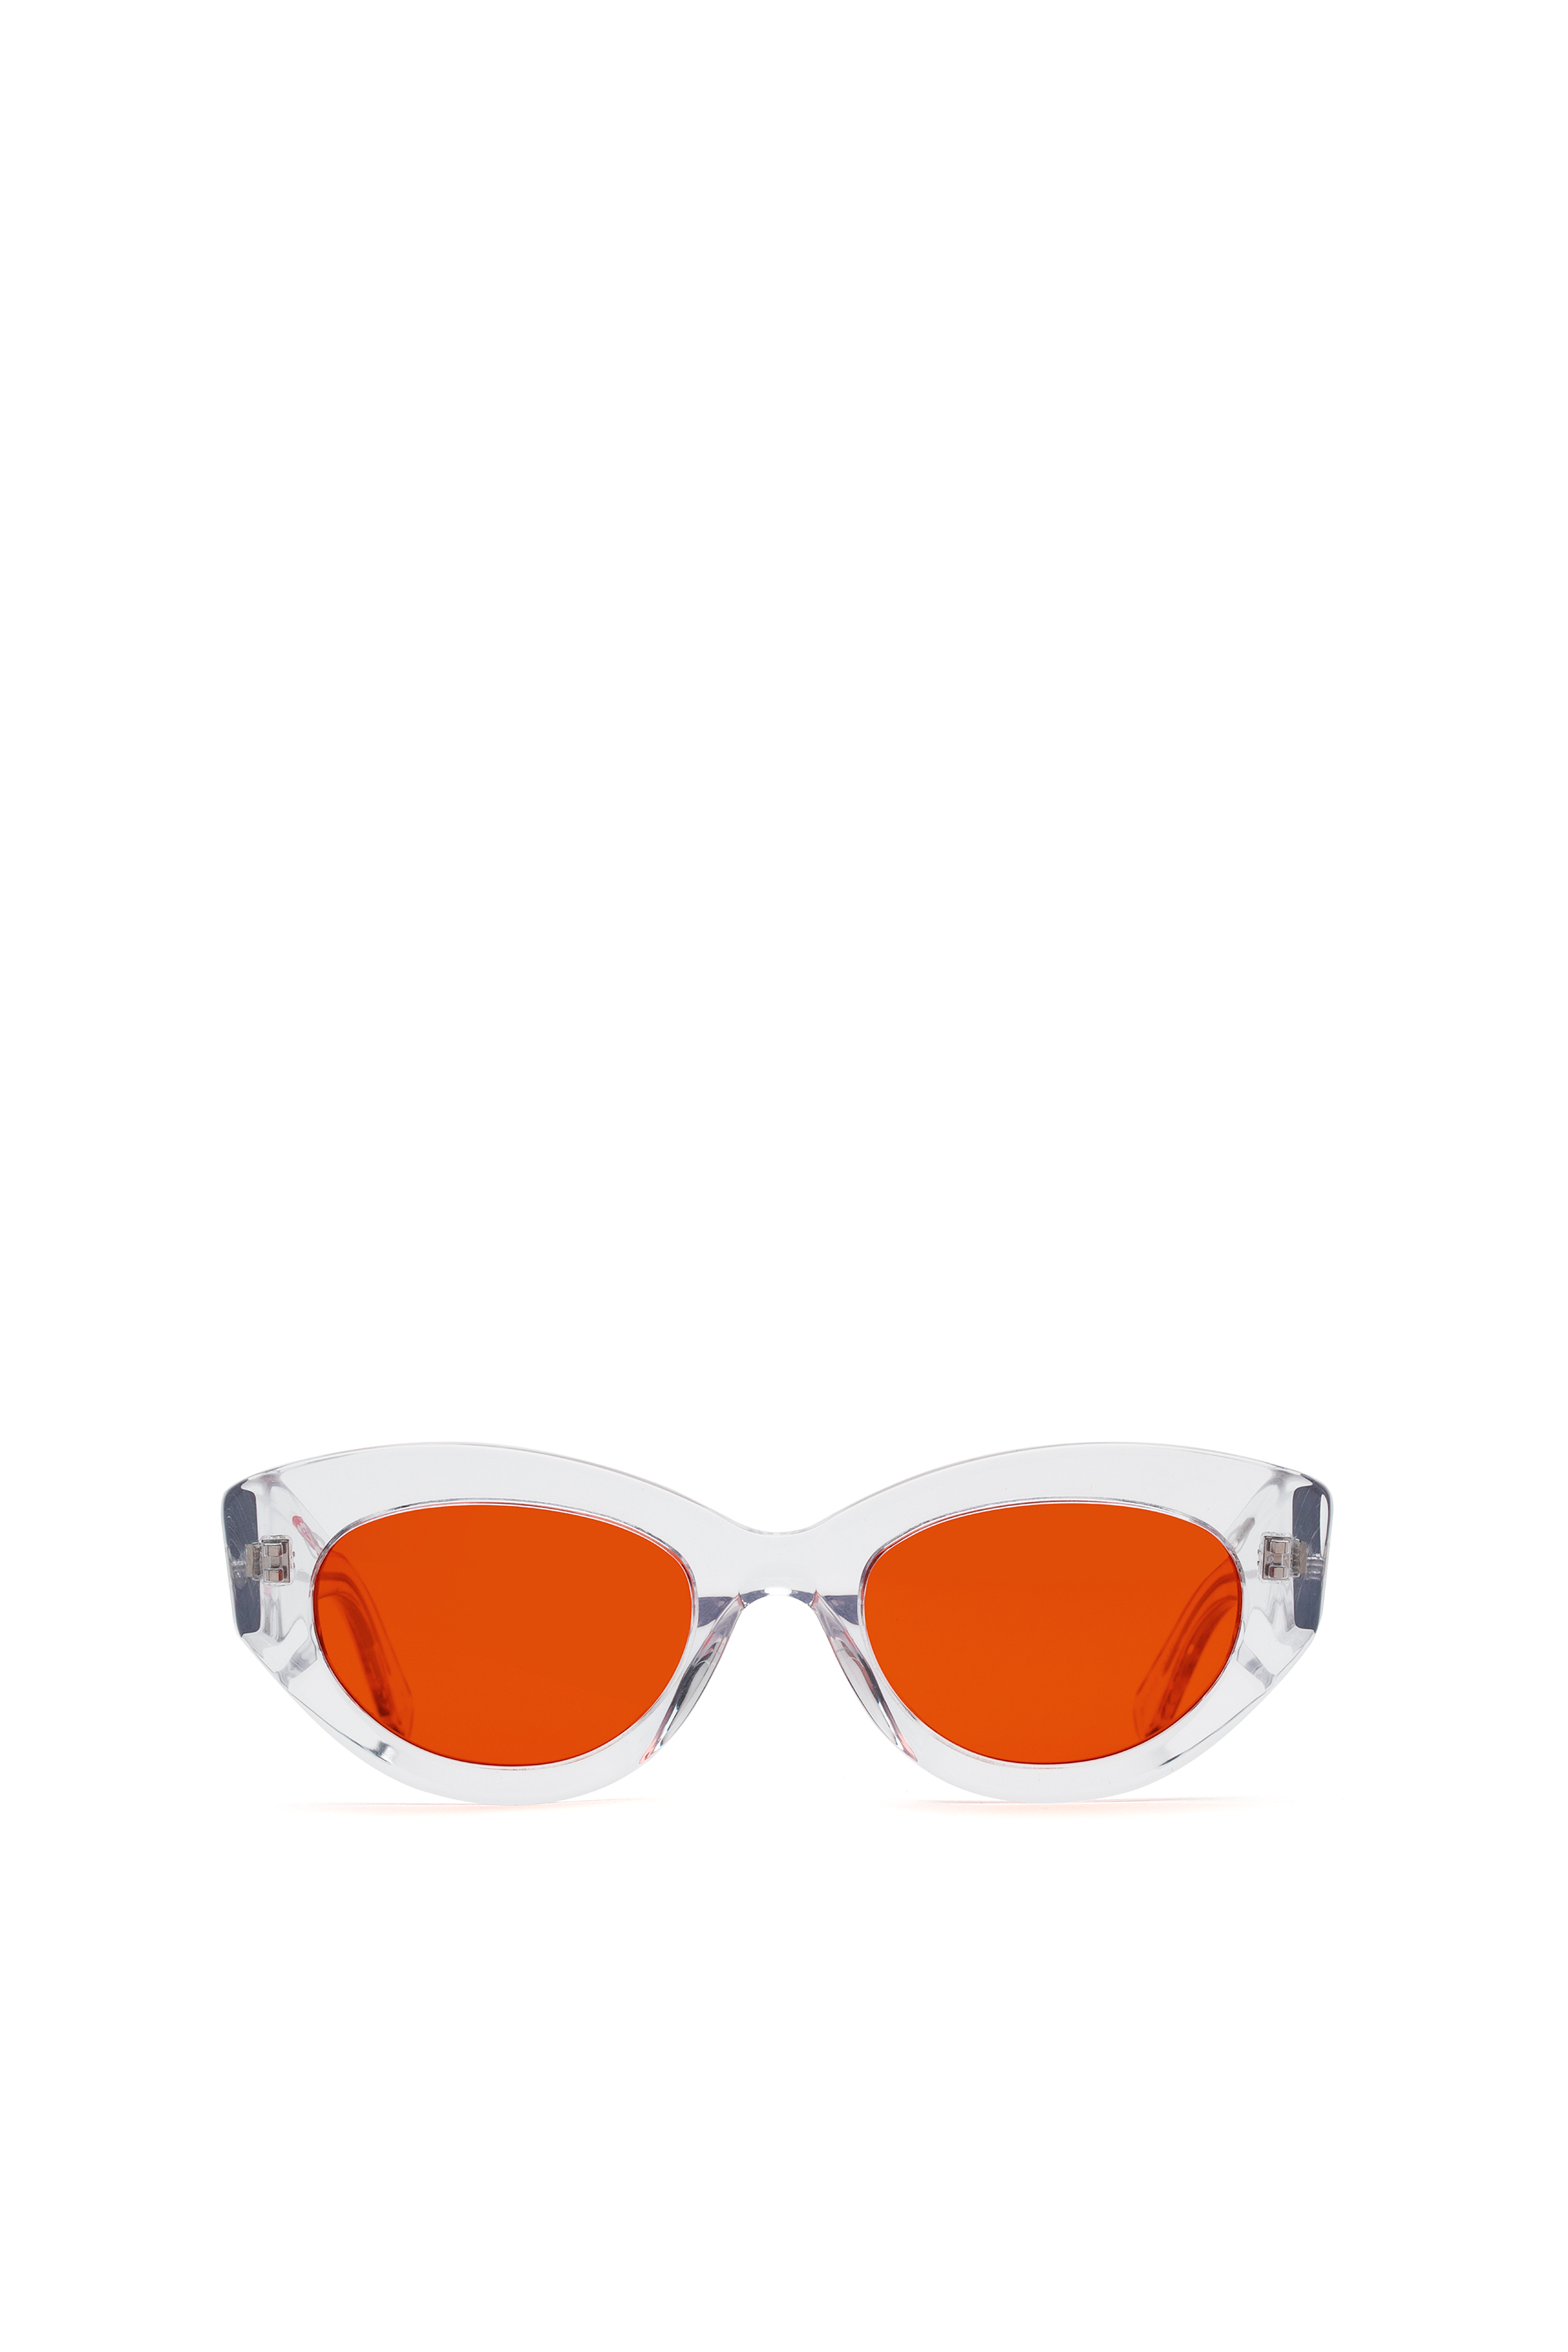 Men's Eyewear Sunglasses | Shop on Diesel.com